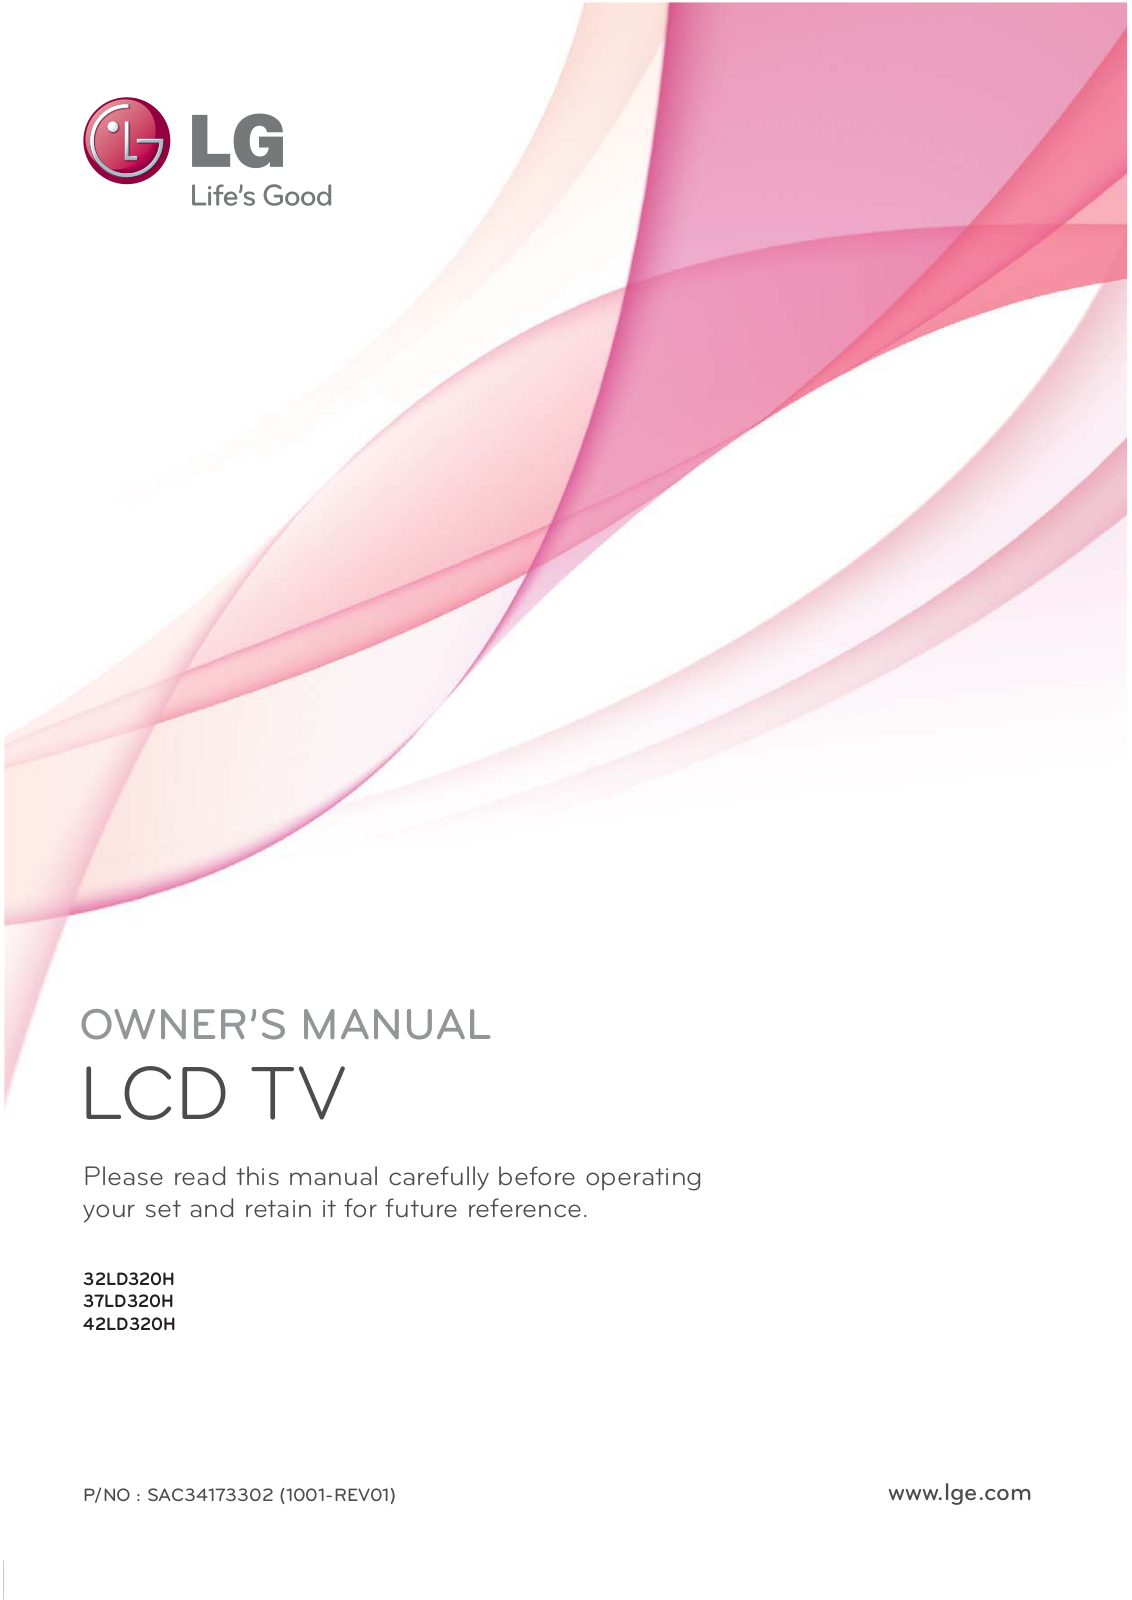 LG 32LD320HUA, 42LD320HUA User Manual